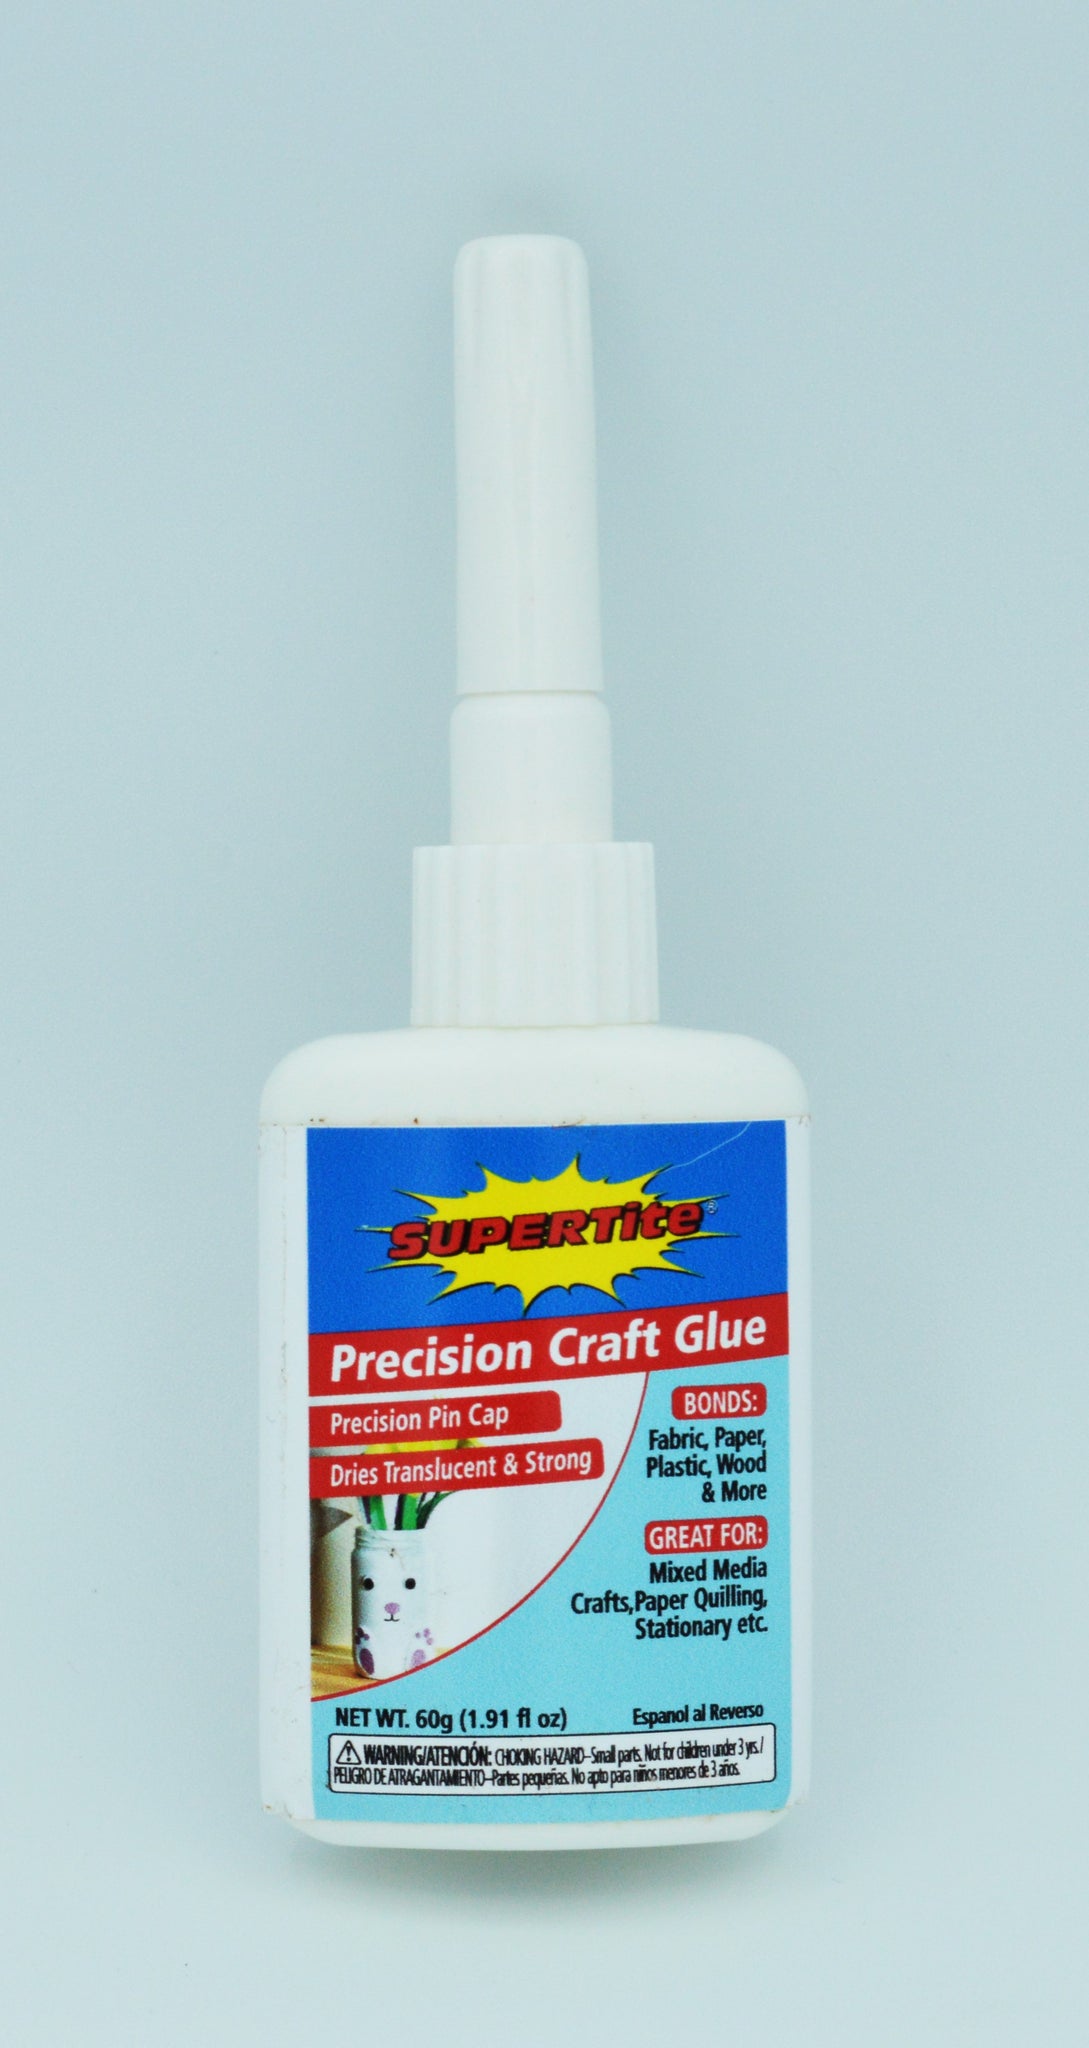 Precision Craft Glue (60g/1.91fl oz) with Pin Cap, Ref. 1113 – Supertite  Adhesives